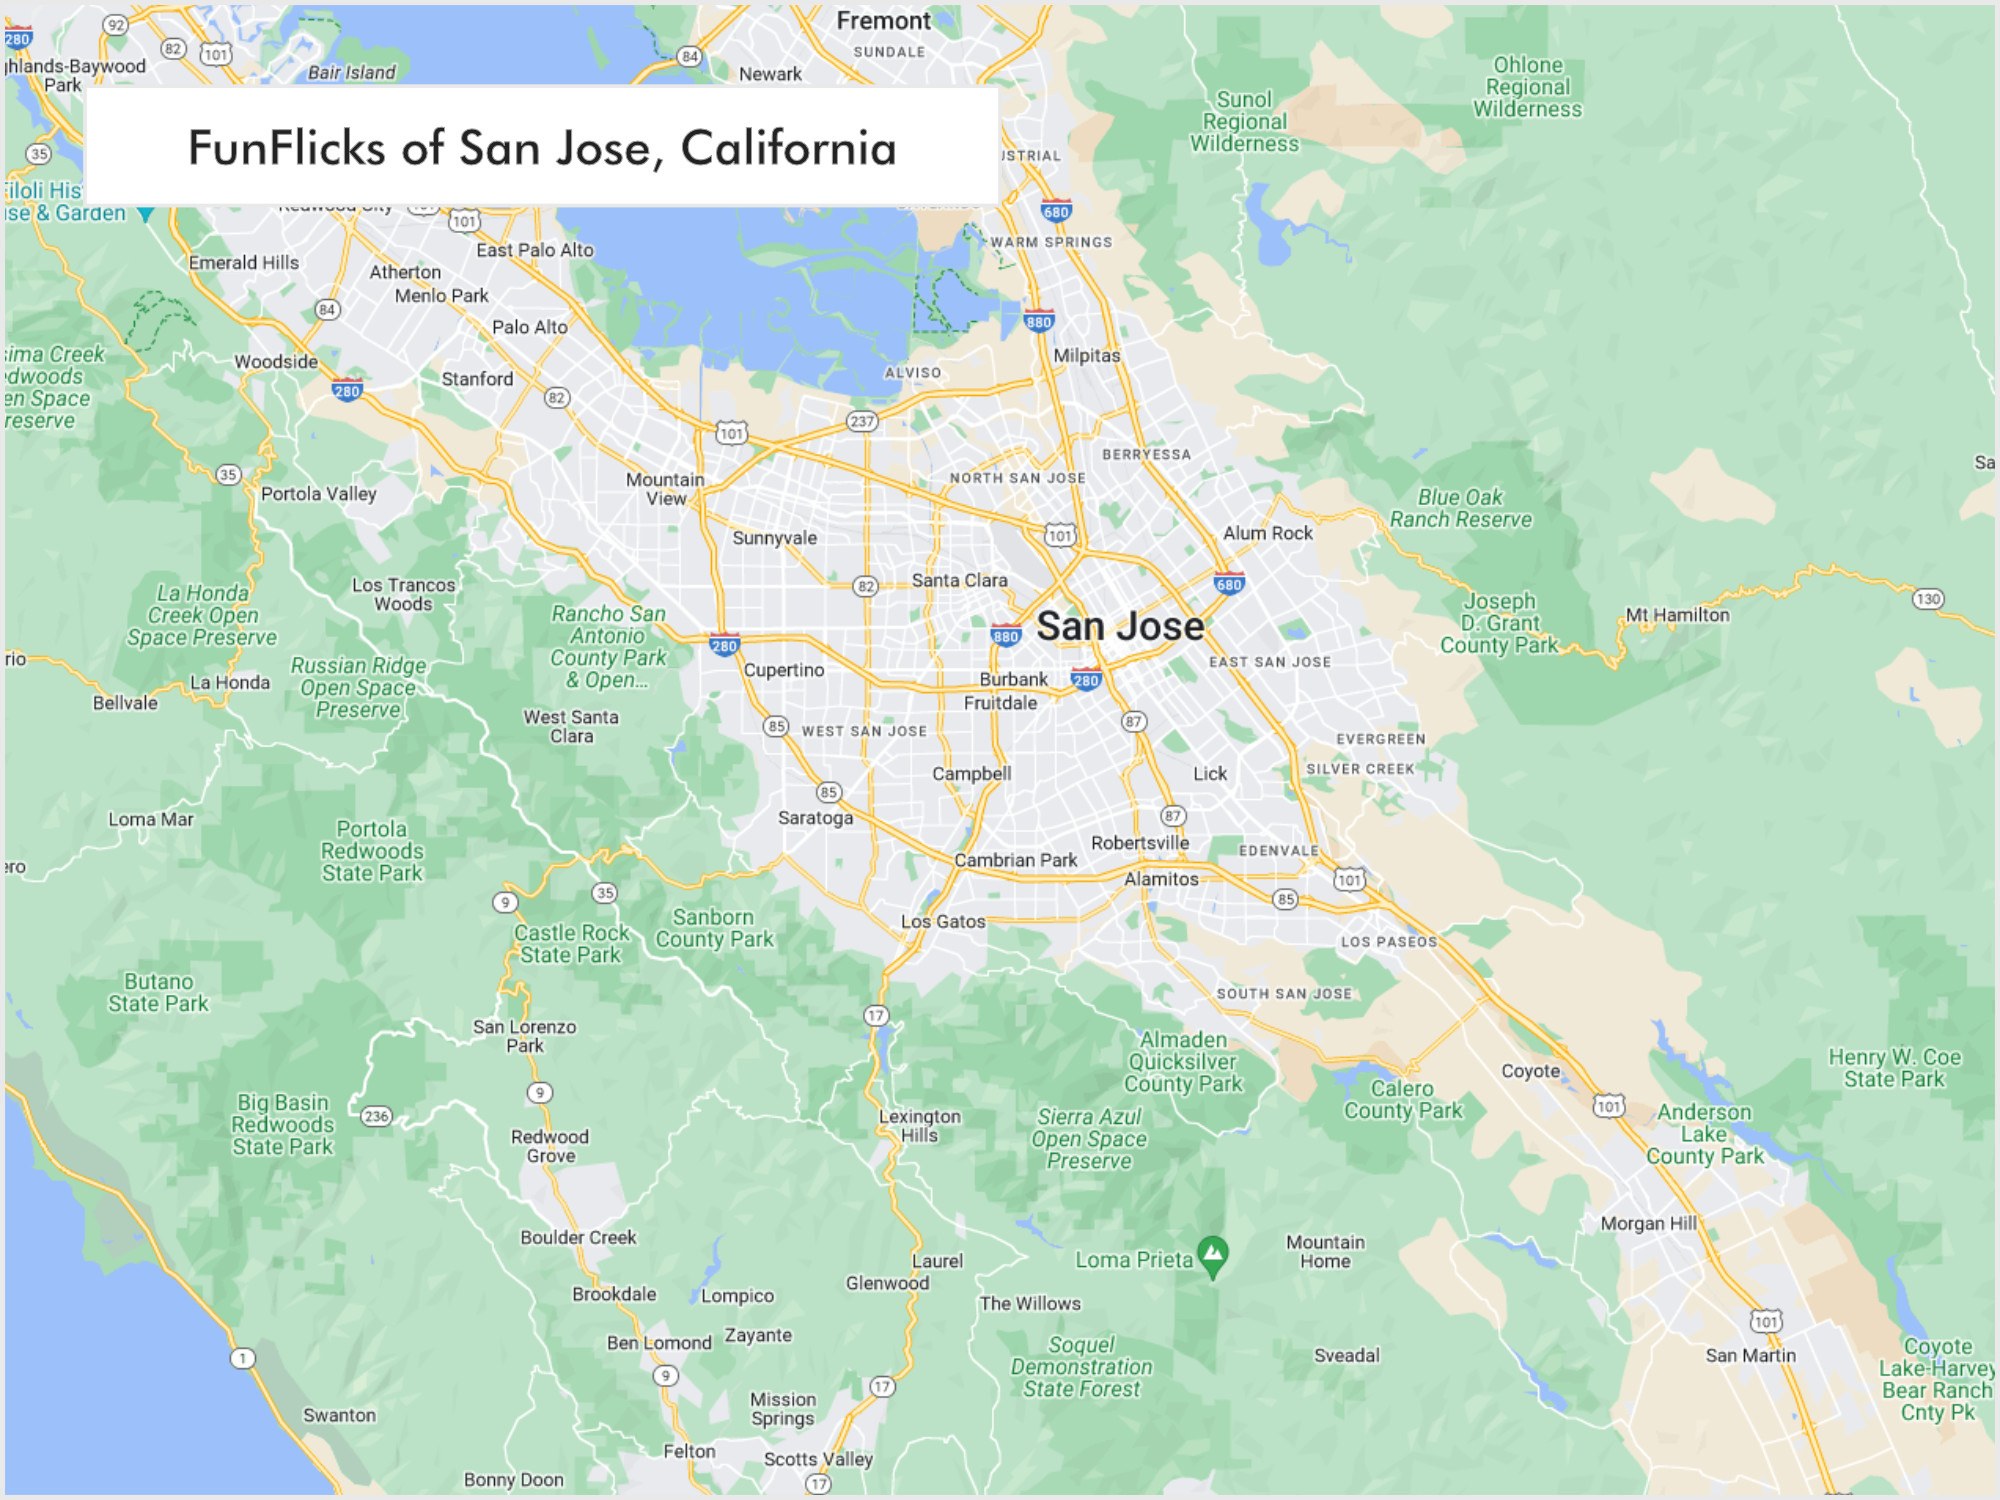 FunFlicks® San Jose territory map